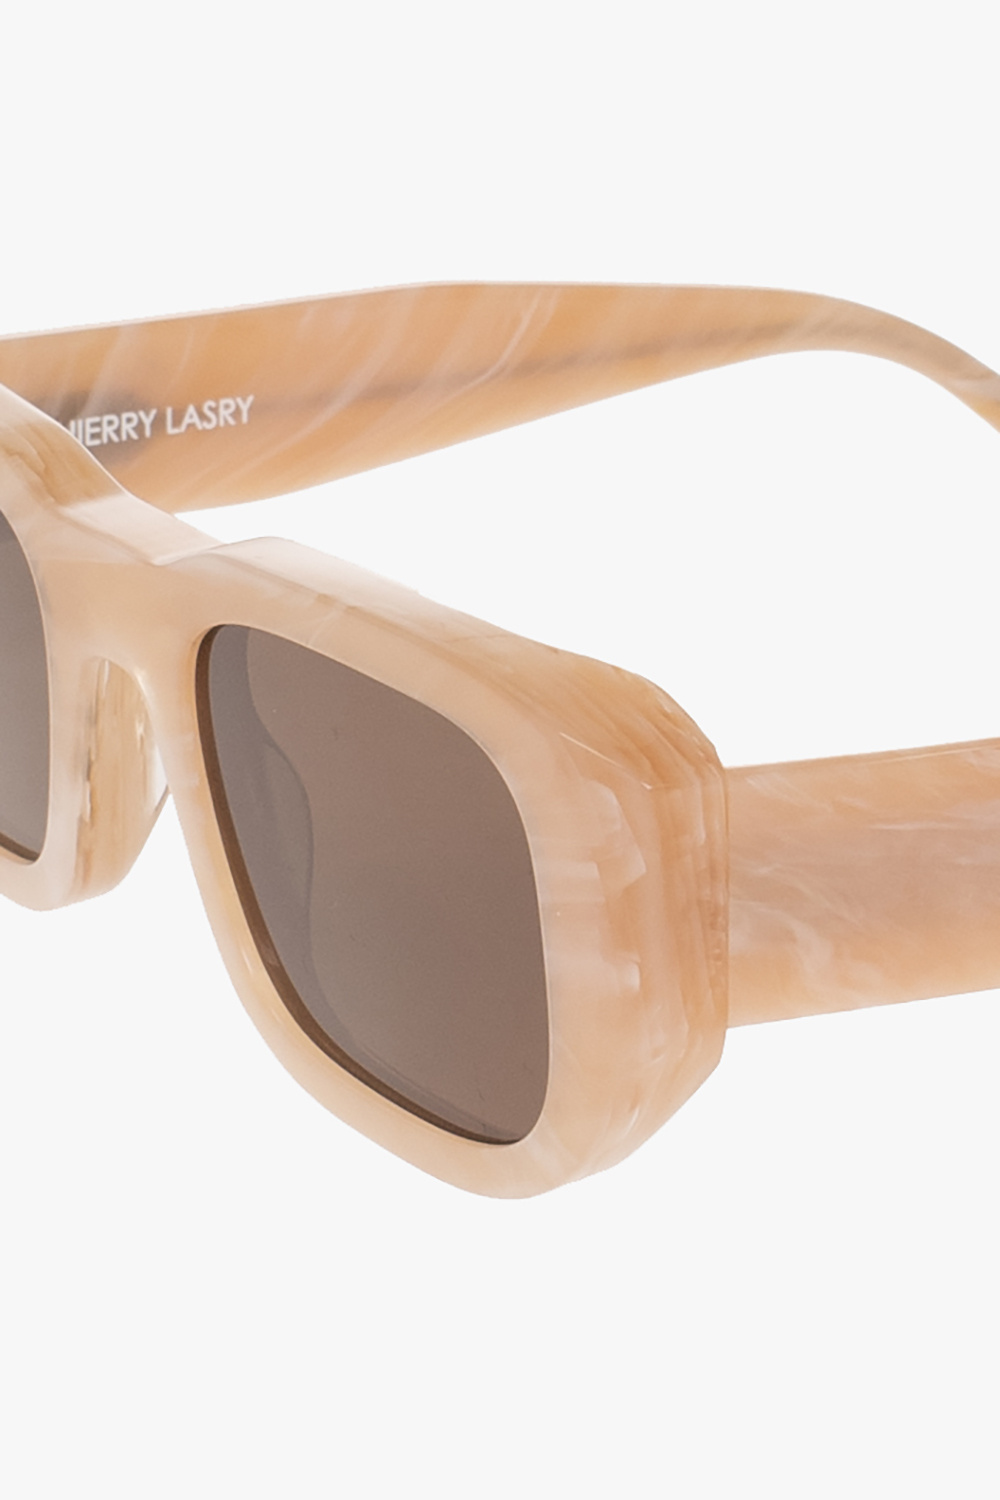 Thierry Lasry ‘Victimy’ sunglasses